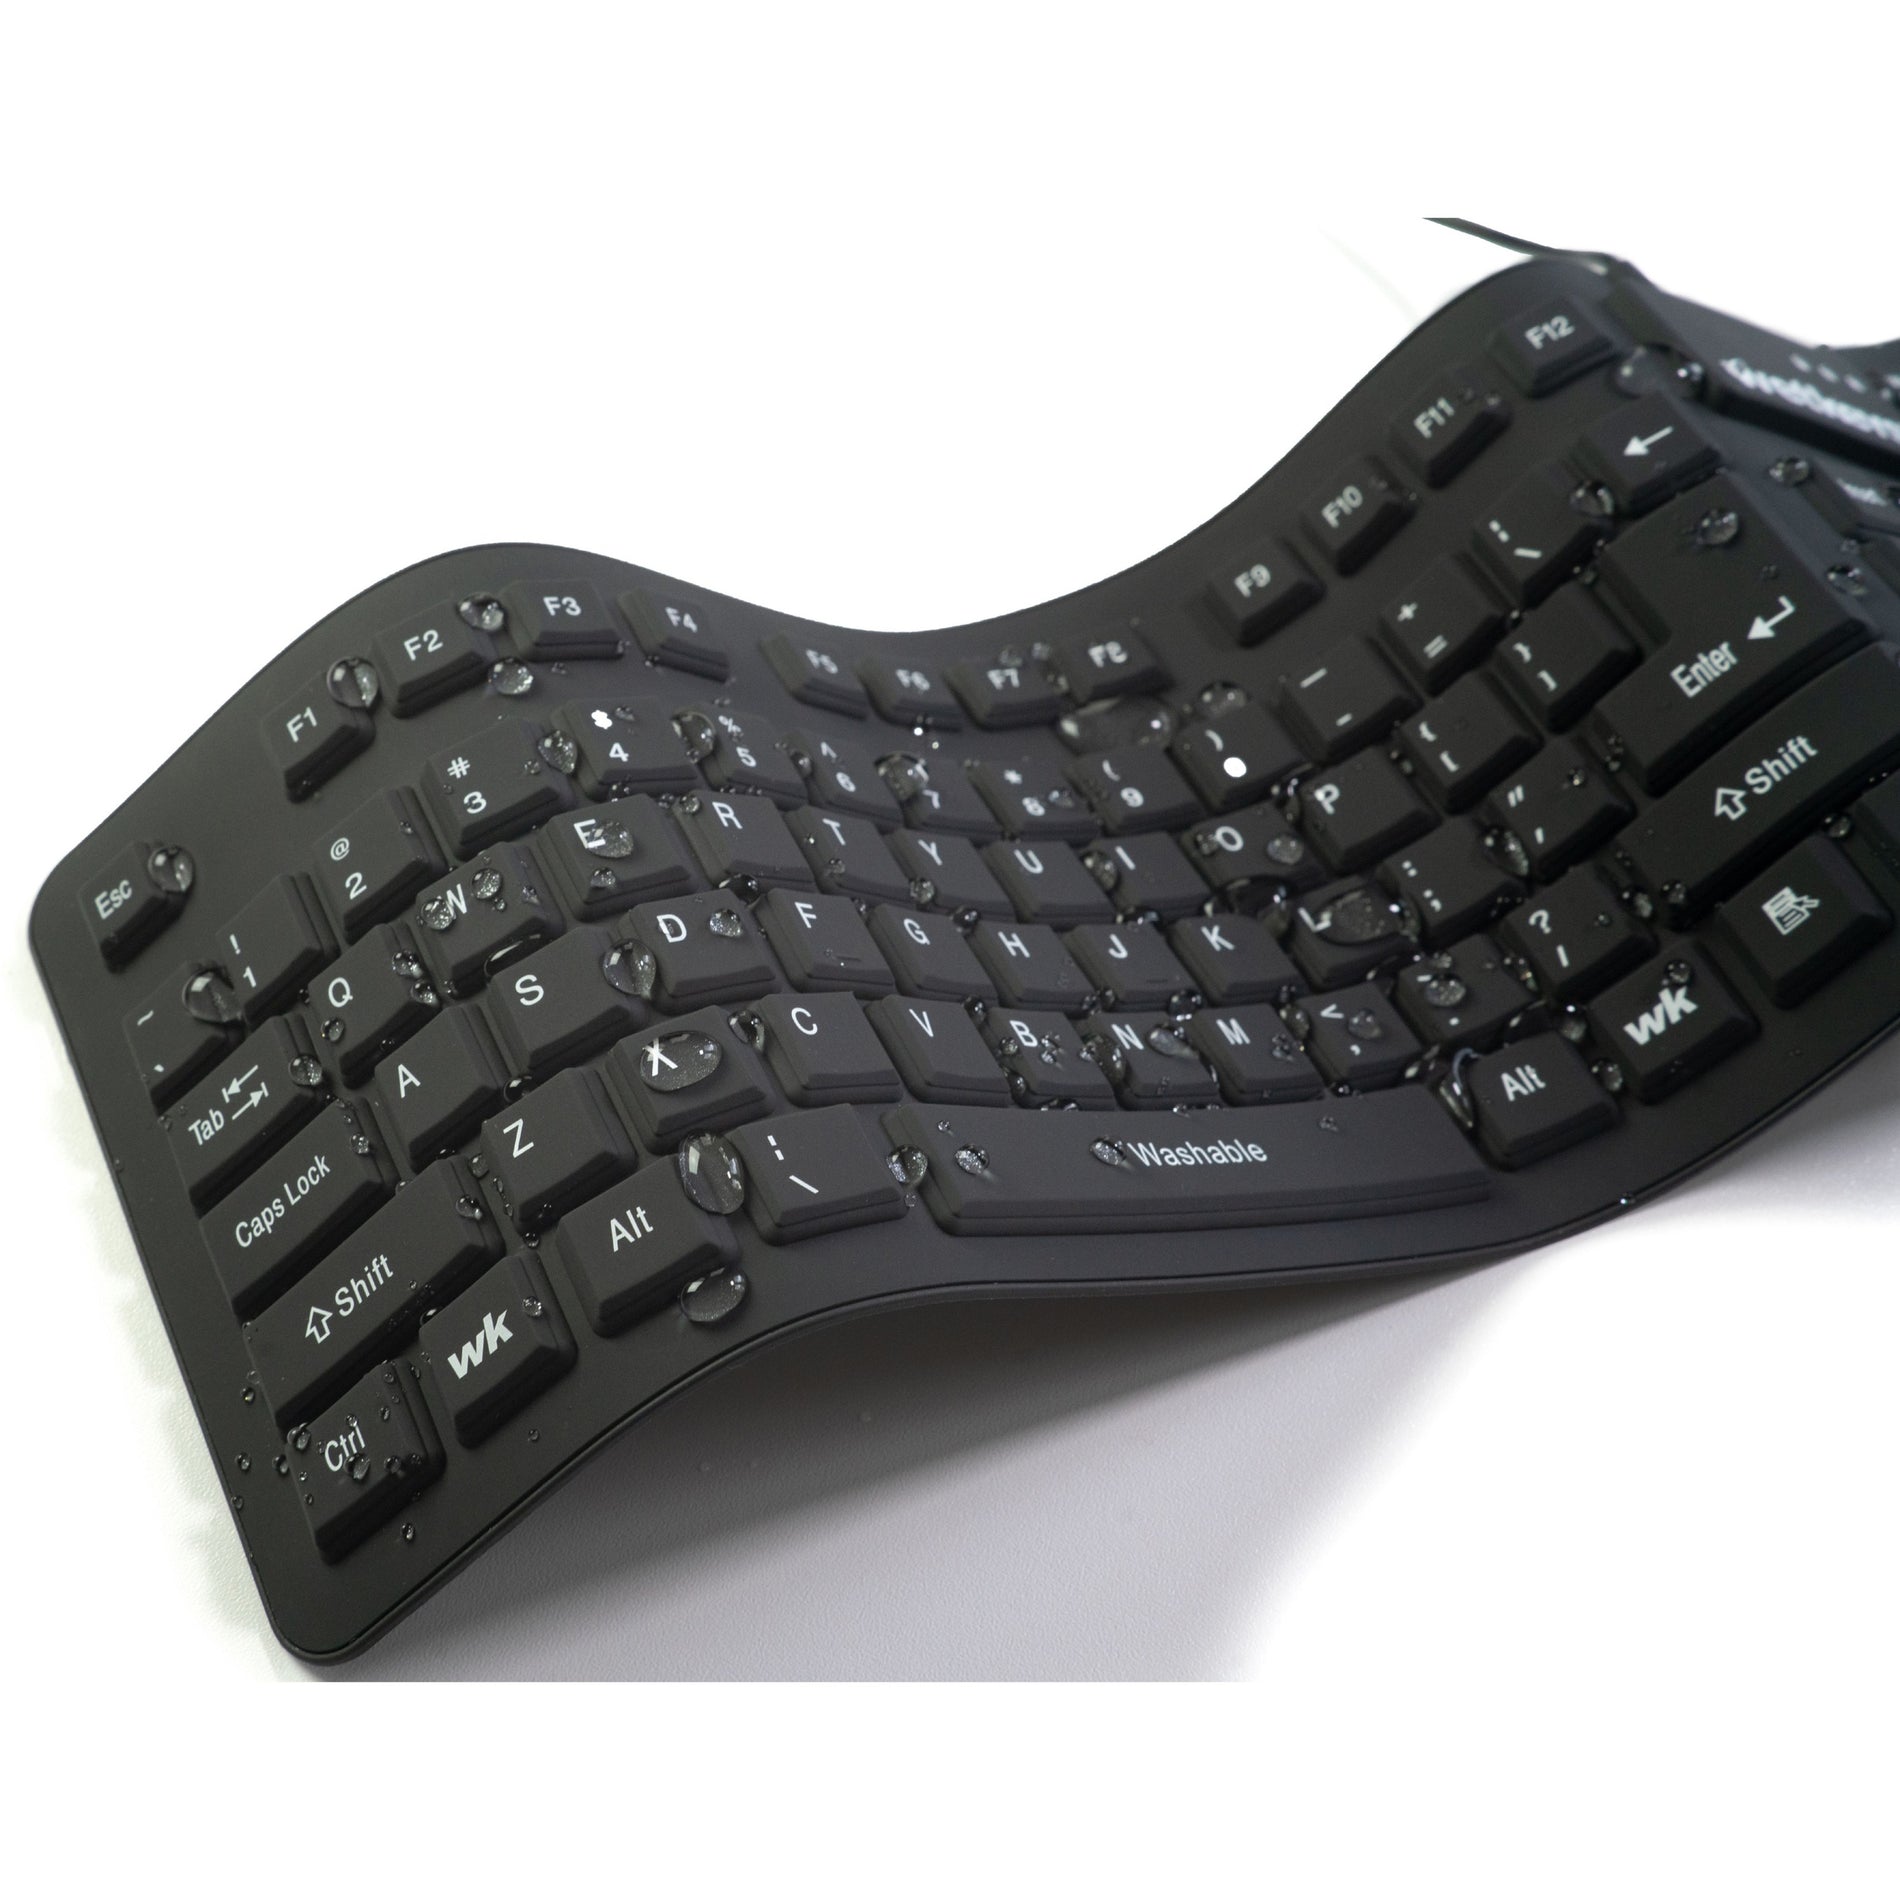 WetKeys Washable Keyboards KBWKFC106-BK Waterproof "Soft-touch Comfort" Professional-grade Keyboard, USB Black